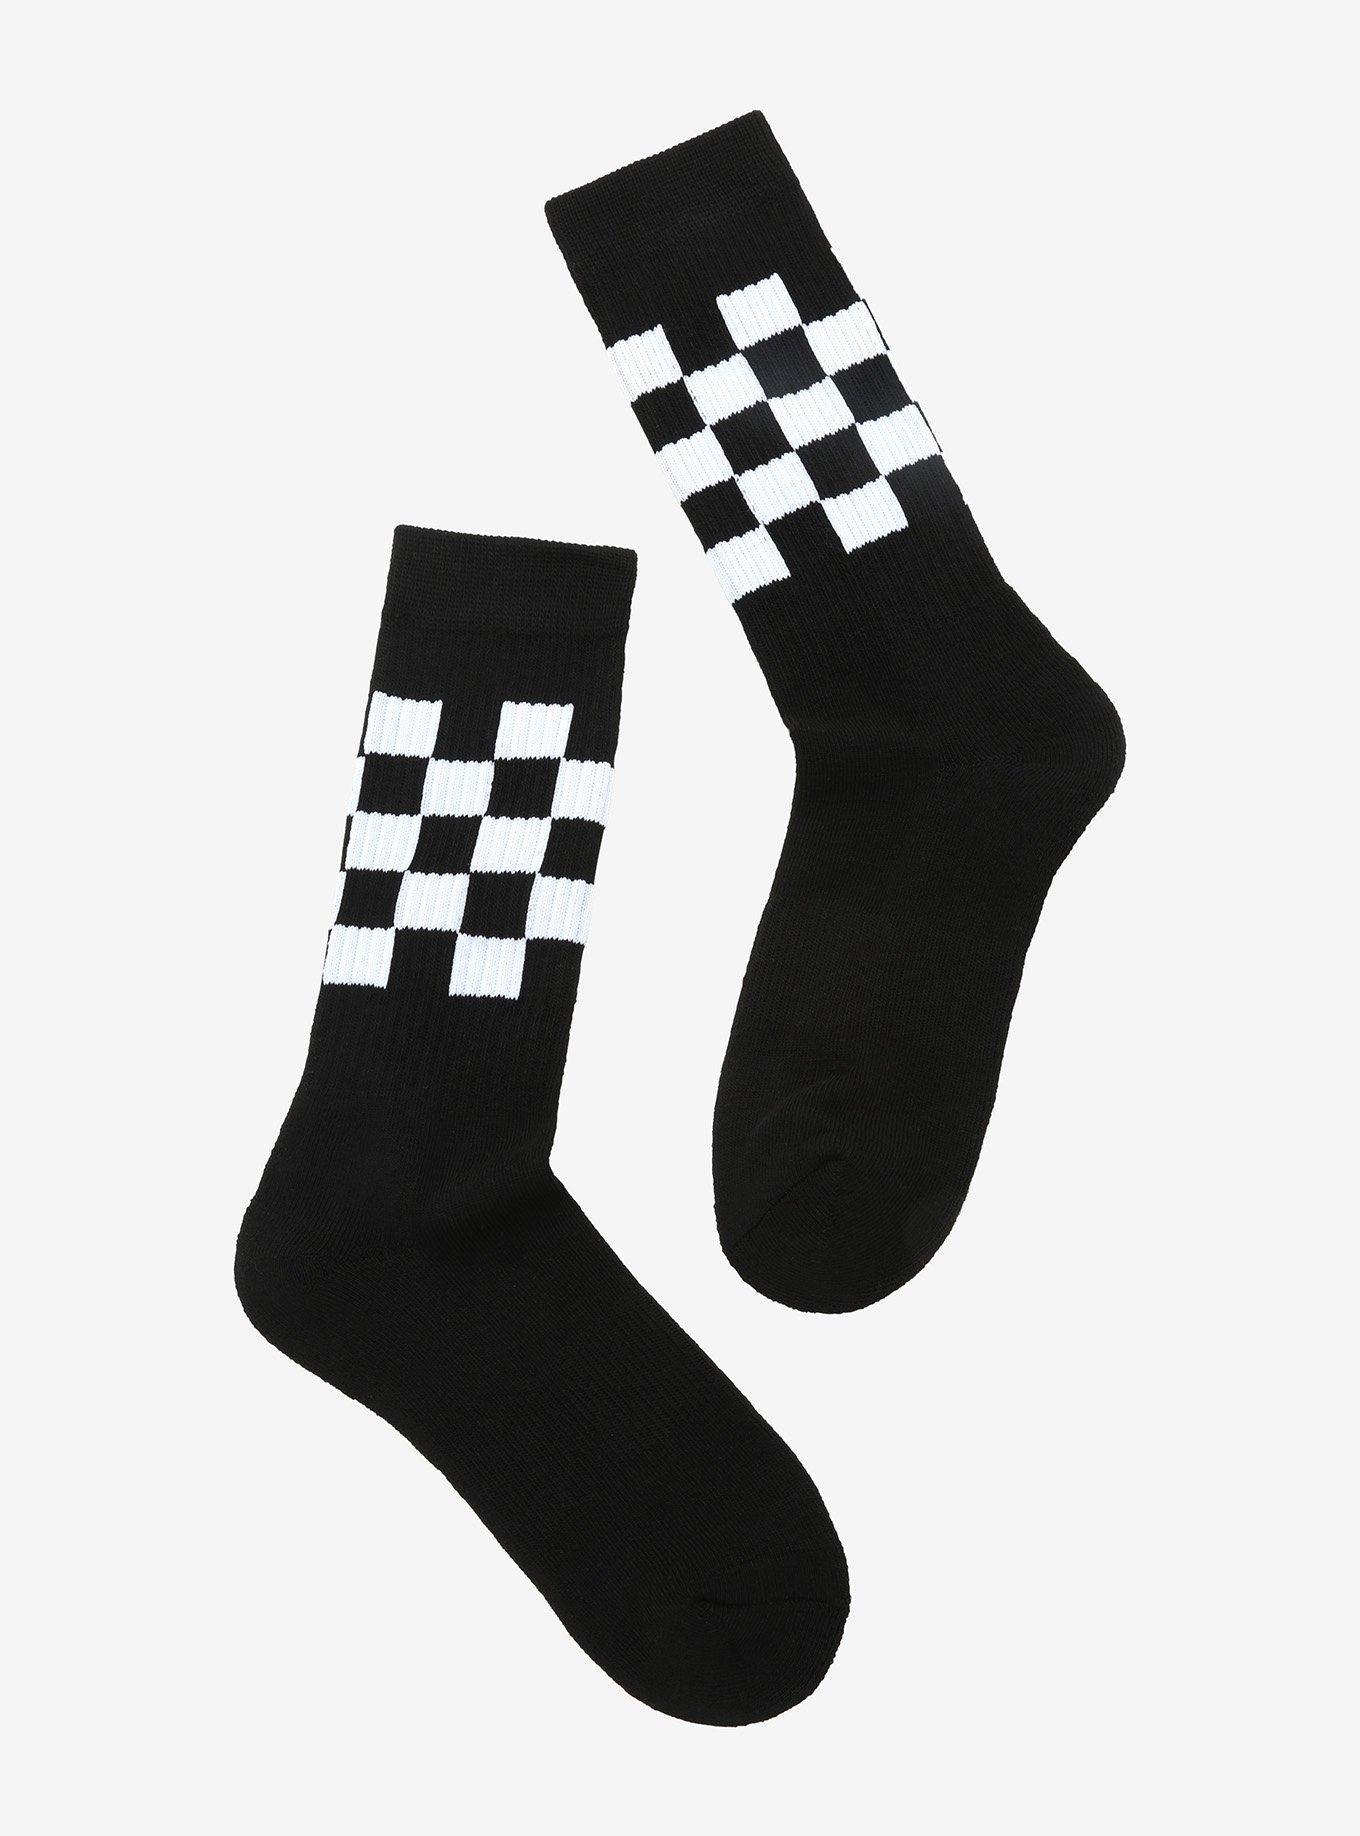 Black & White Checkered Crew Socks, , hi-res